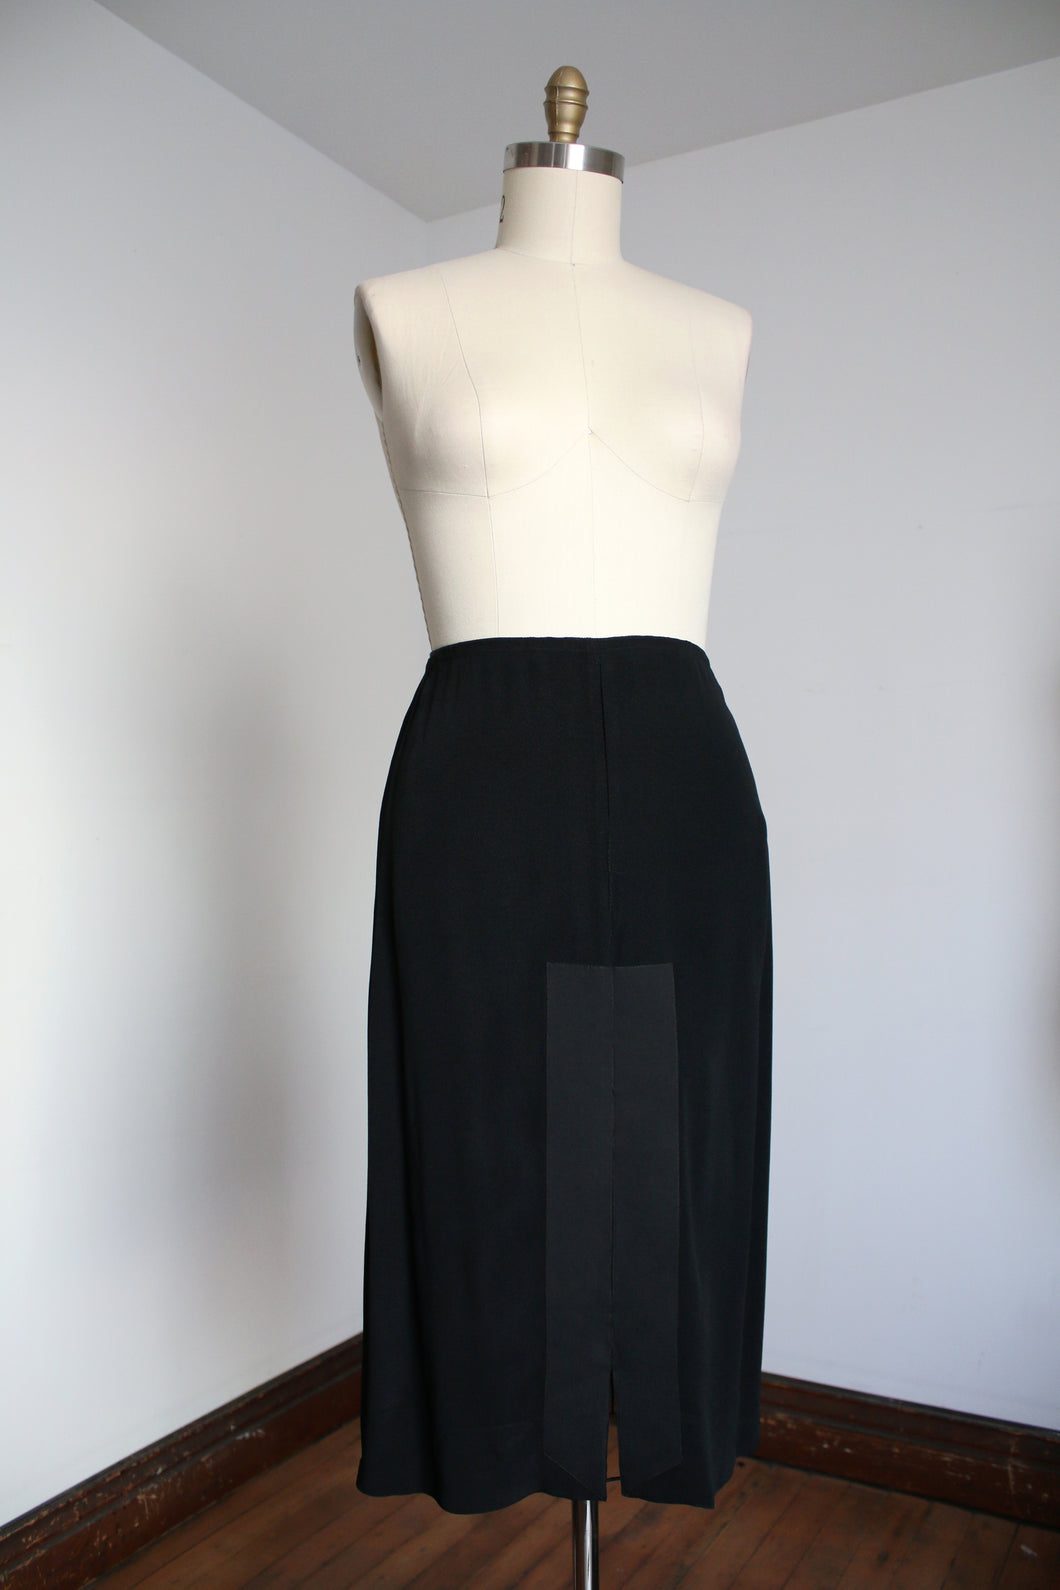 vintage 1940s black rayon skirt {M}